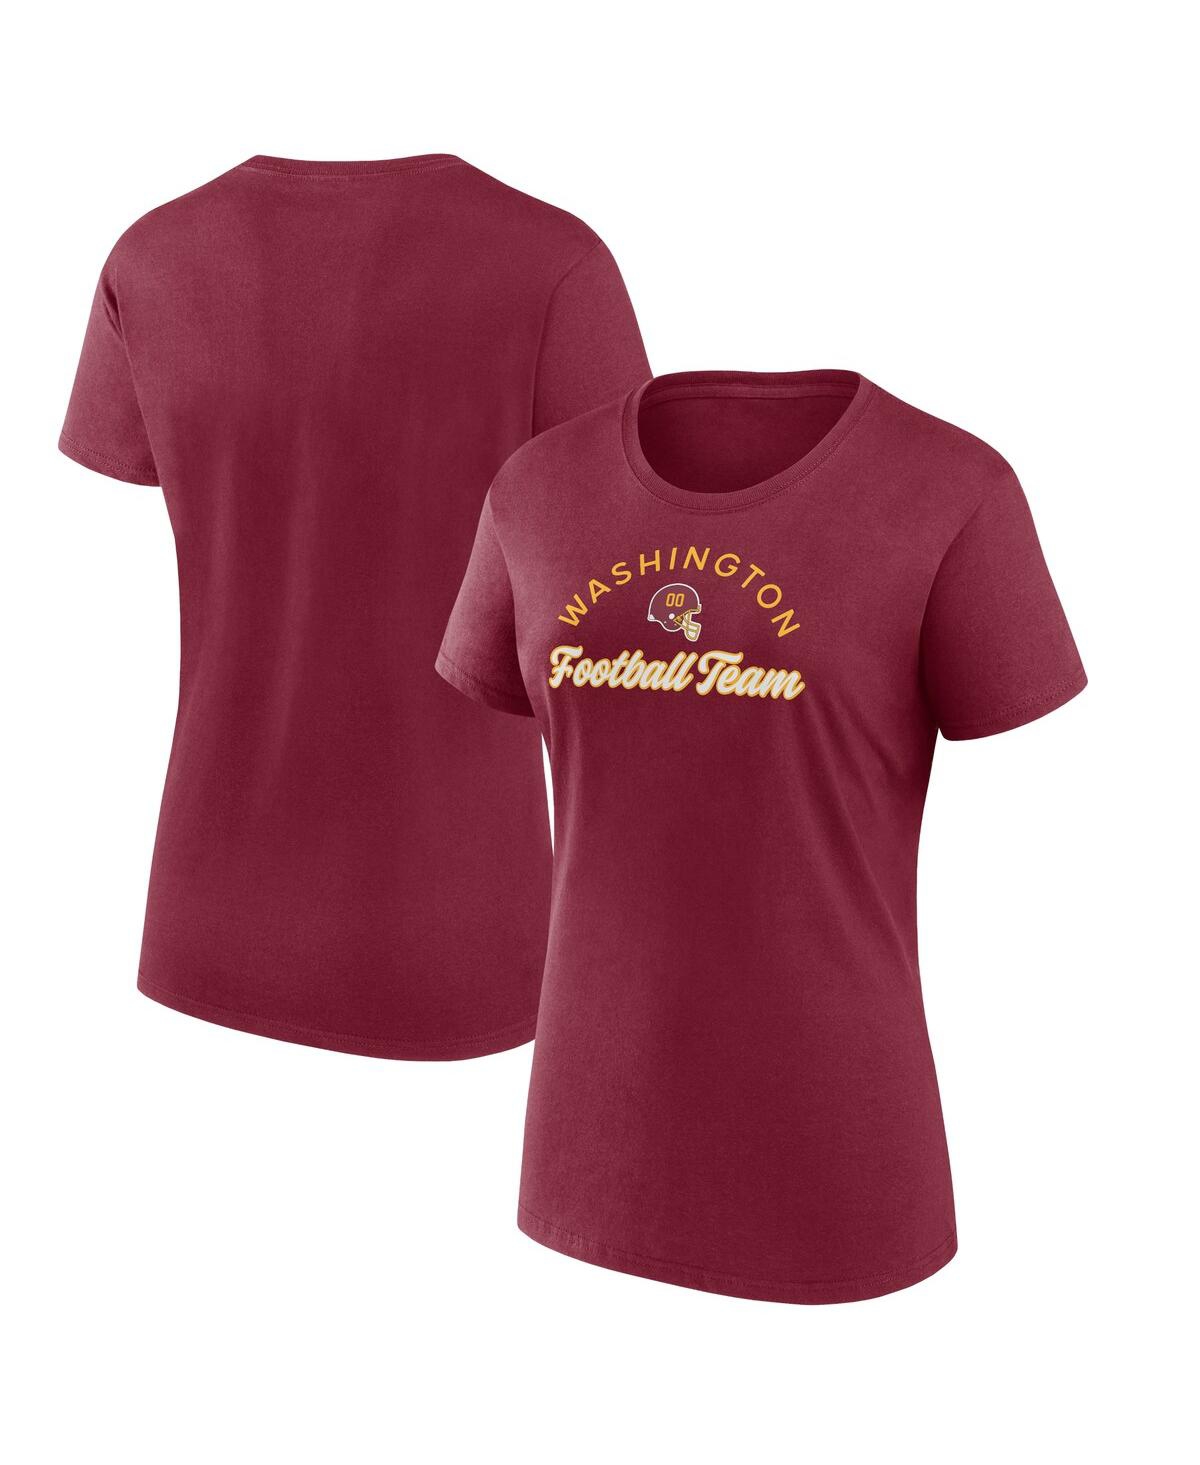 Fanatics Women's  Burgundy Washington Commanders Primary Component T-shirt